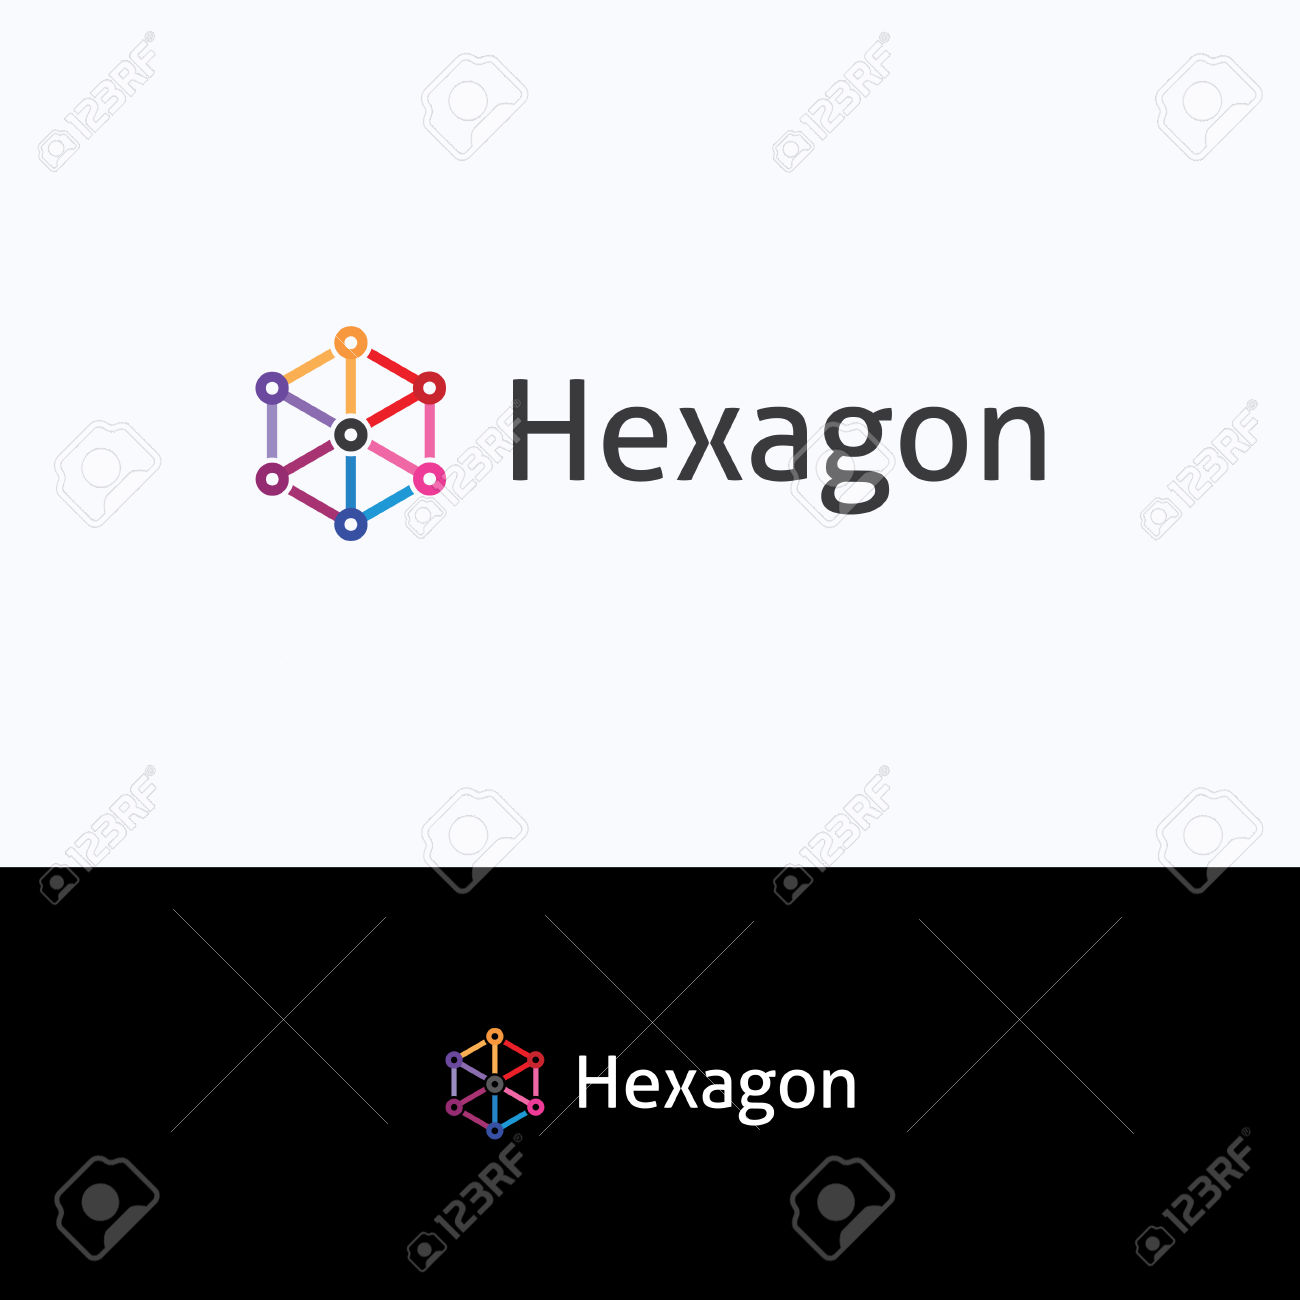 Hexagon 3D Cube Frame Logo Bright Multicolor Royalty Free Cliparts.